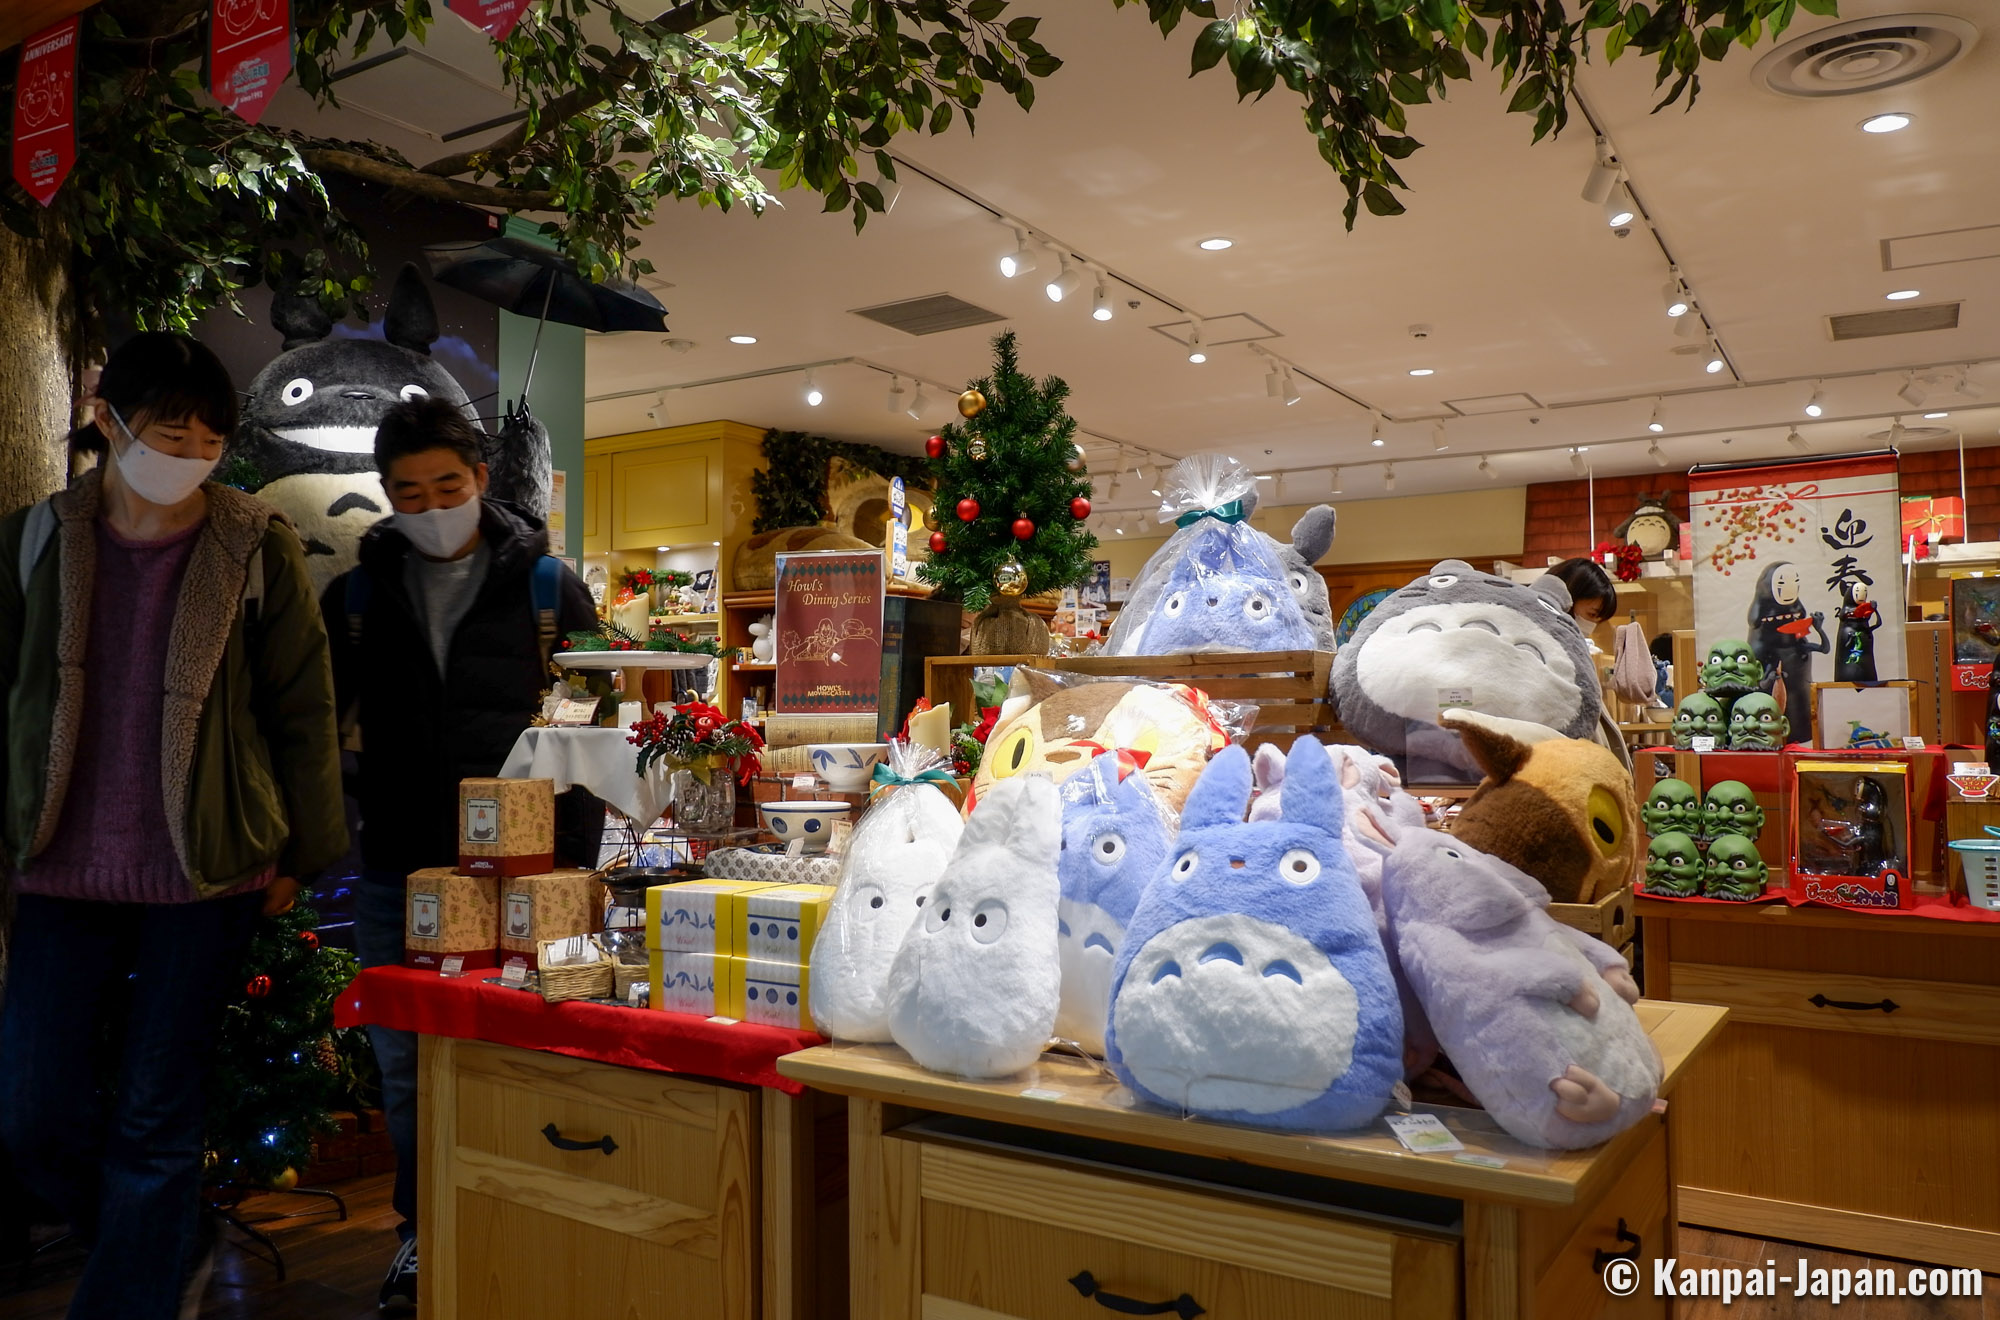 Official Ghibli plush toys - Studio Ghibli Official Store